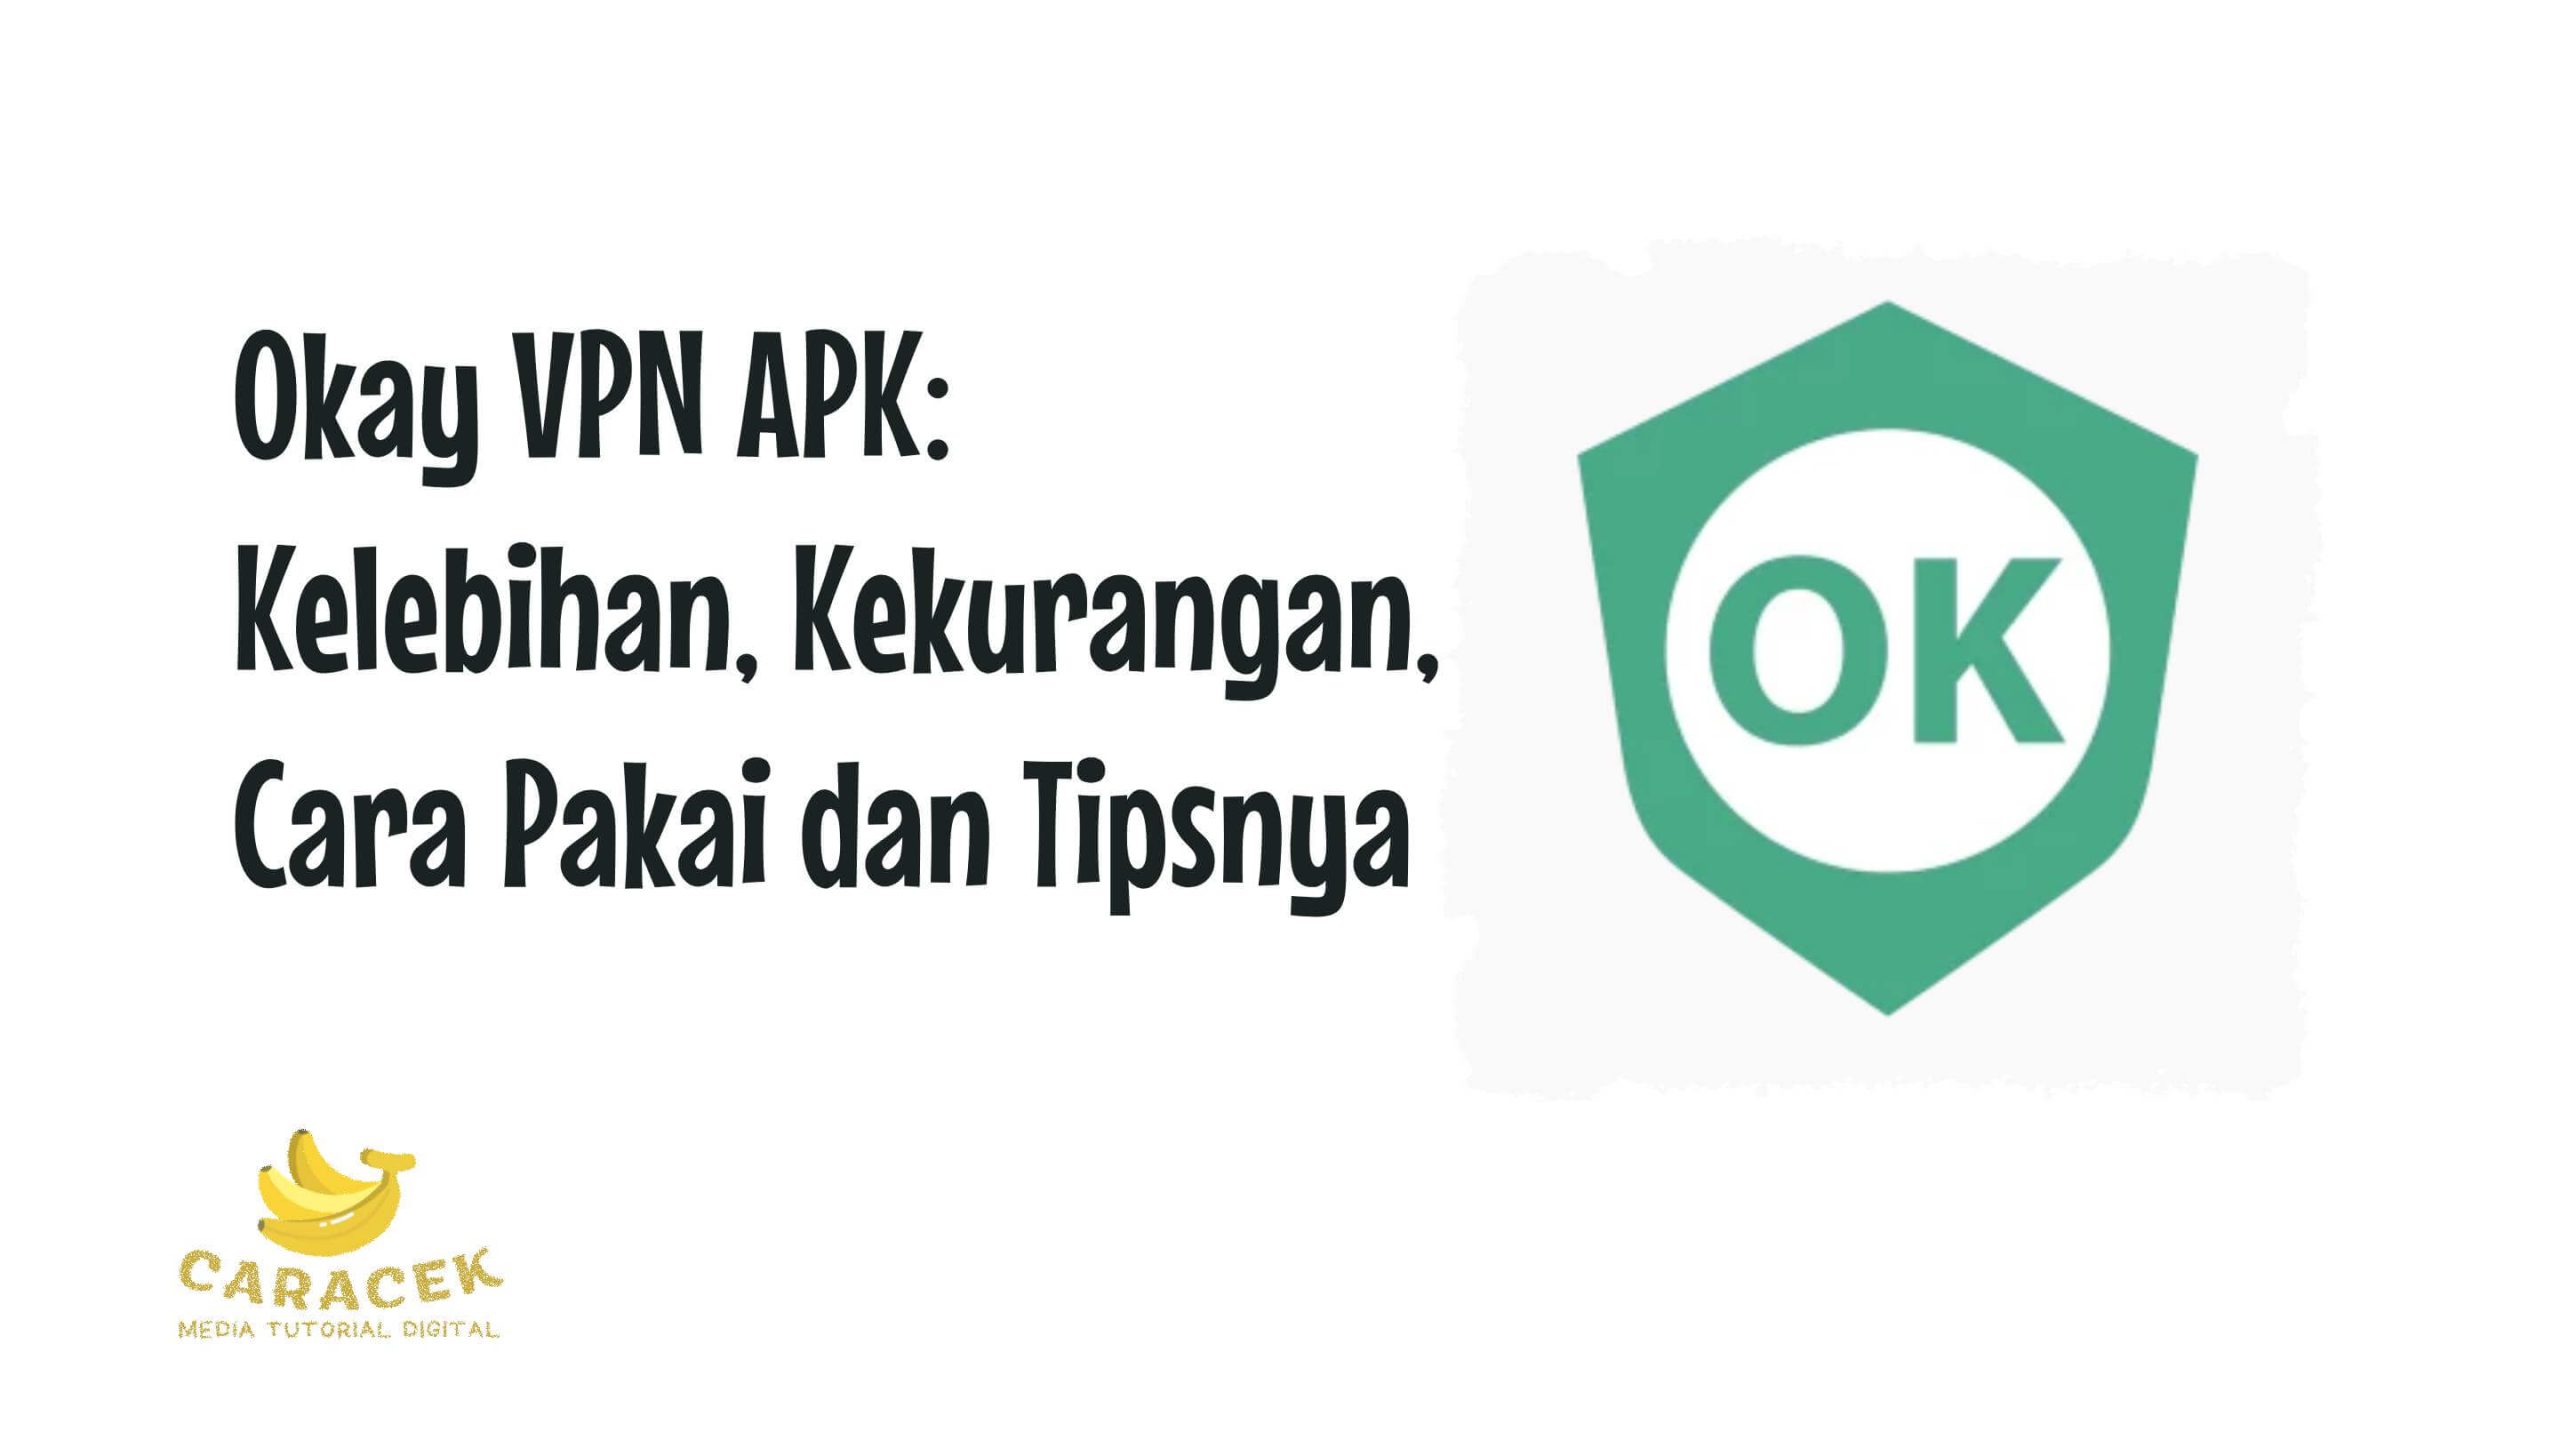 Okay VPN APK